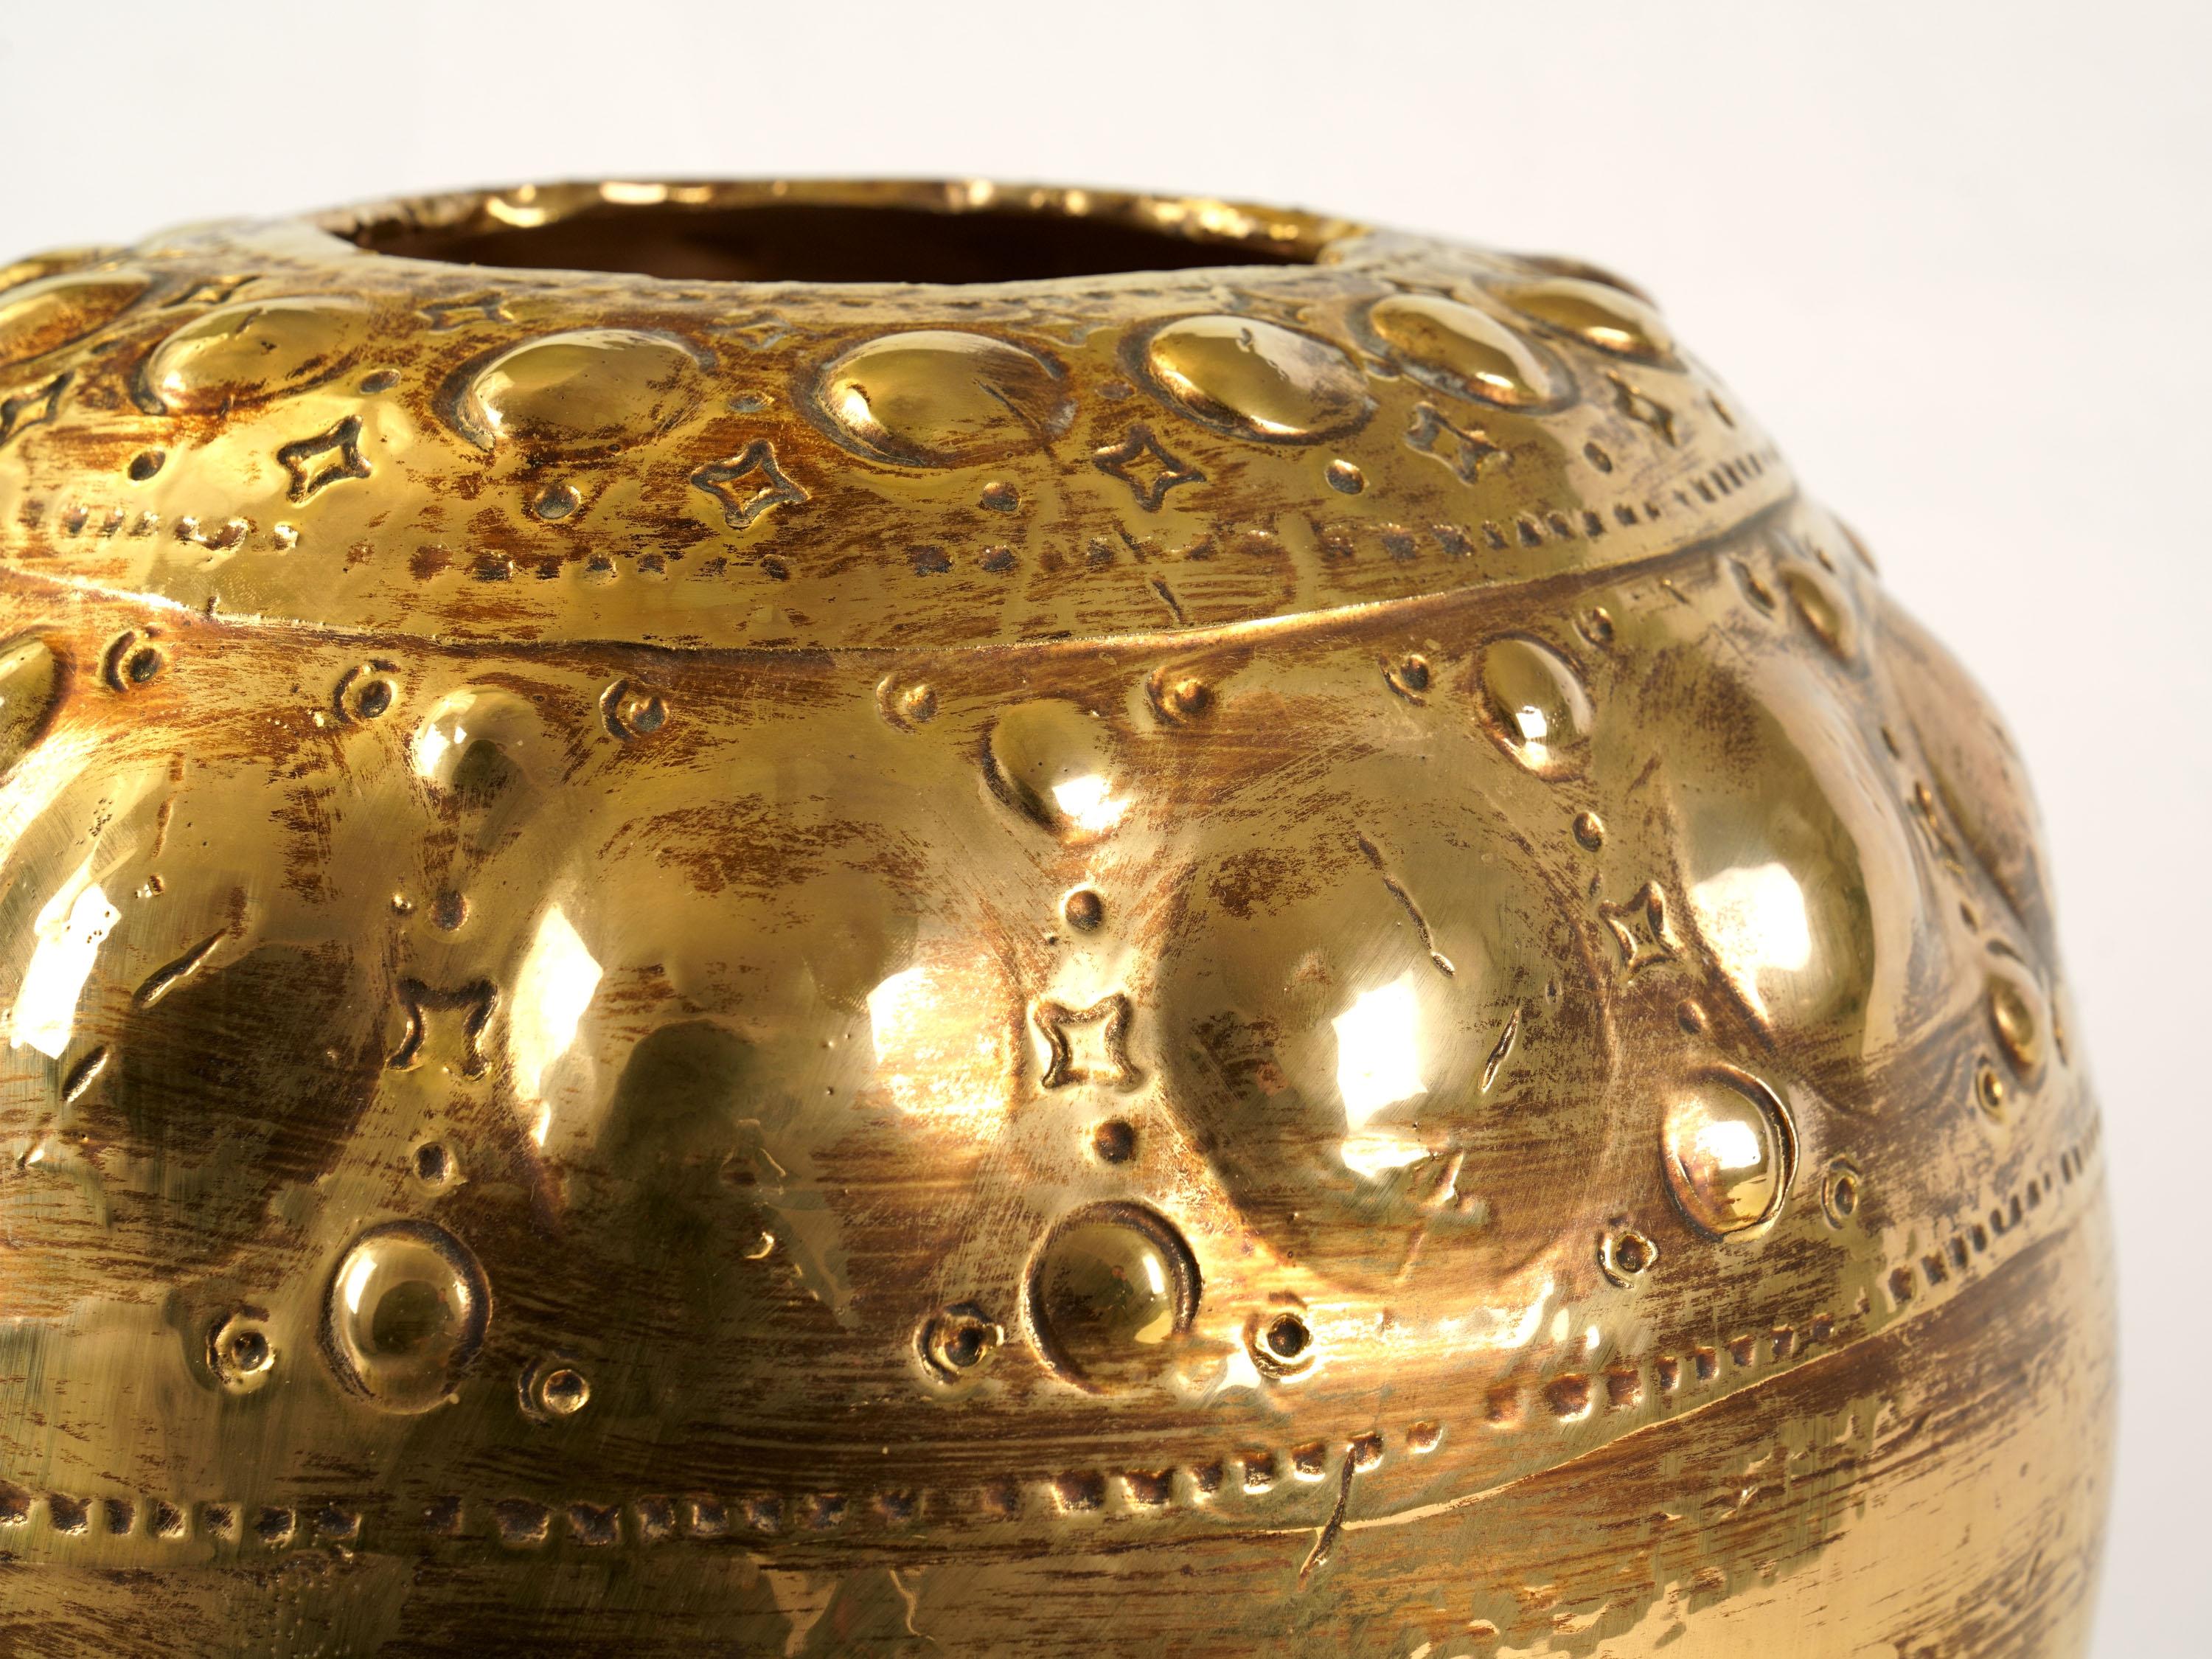 Contemporary Spherical Ball Shape Ceramic Vase Vessel Sculpture Decorated 24kt Gold Luster  For Sale